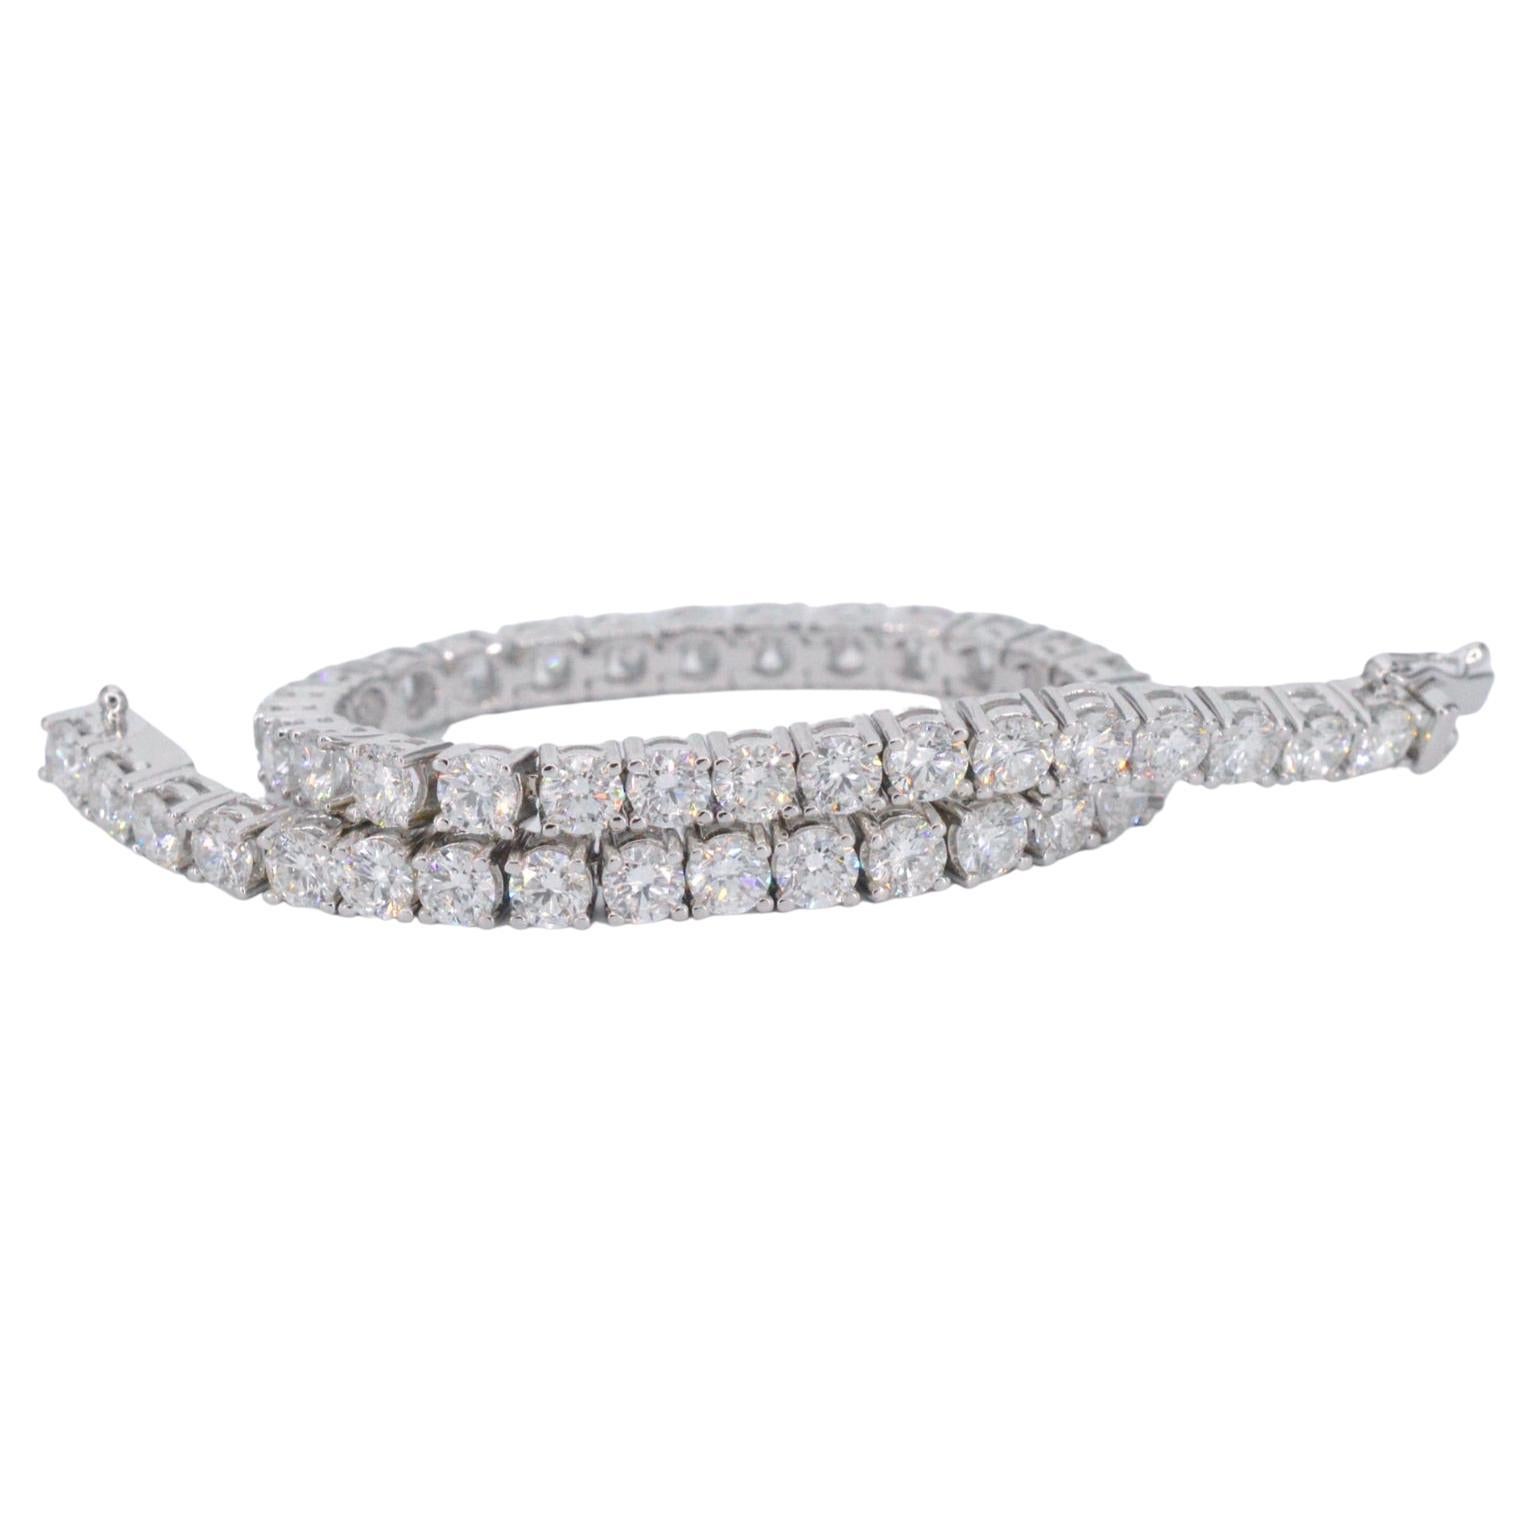 Bracelets with 46 diamonds of 9.00 carat